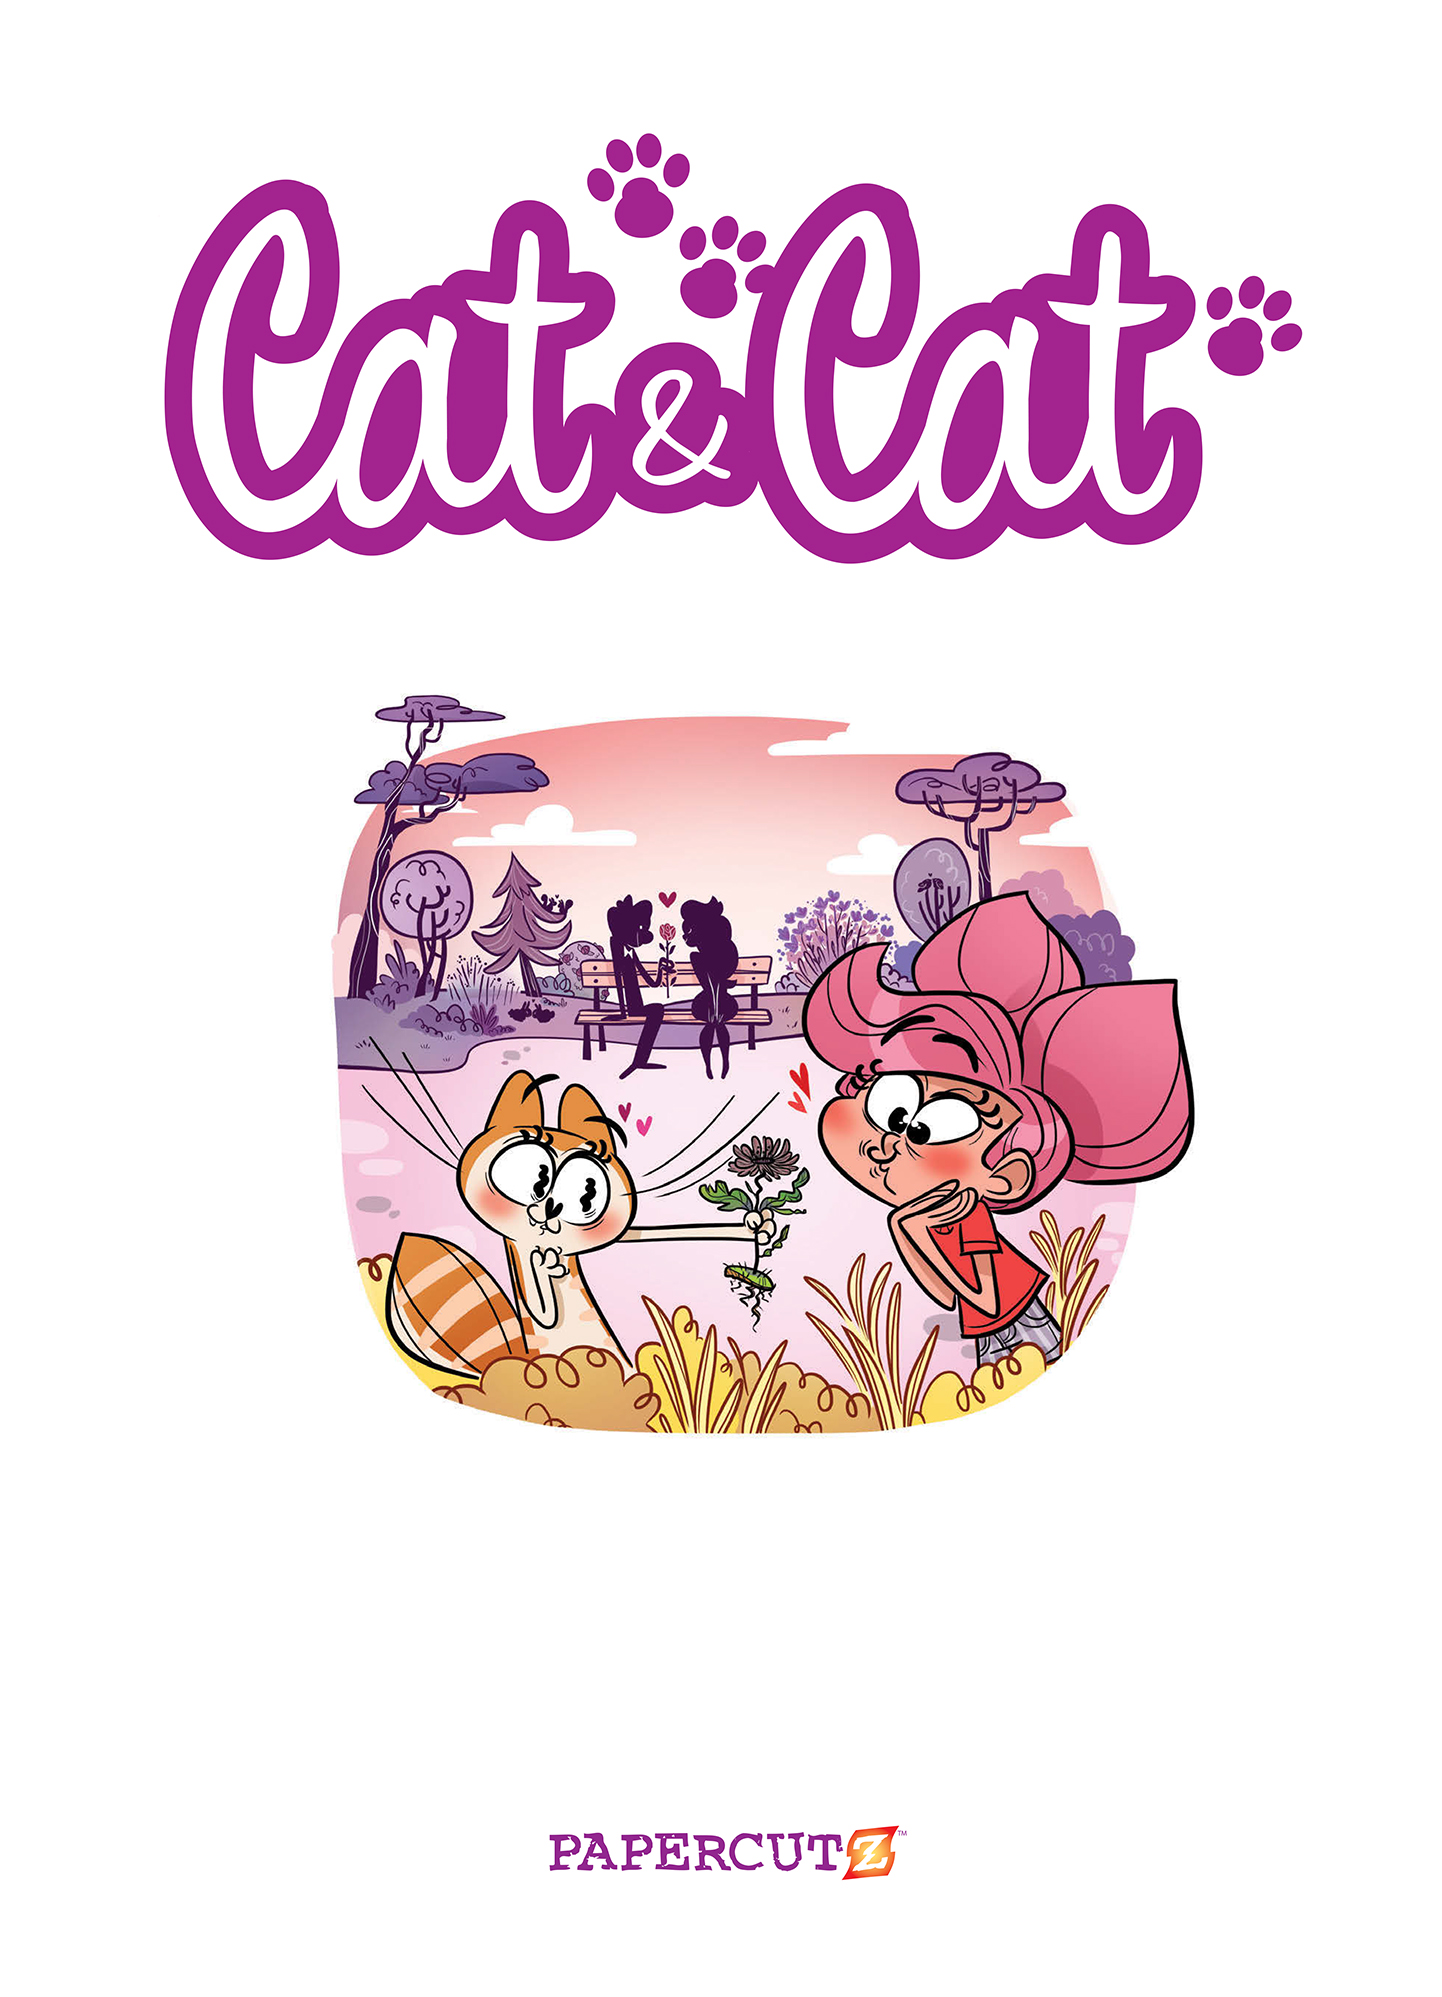 Read online Cat & Cat comic -  Issue # TPB 3 - 3